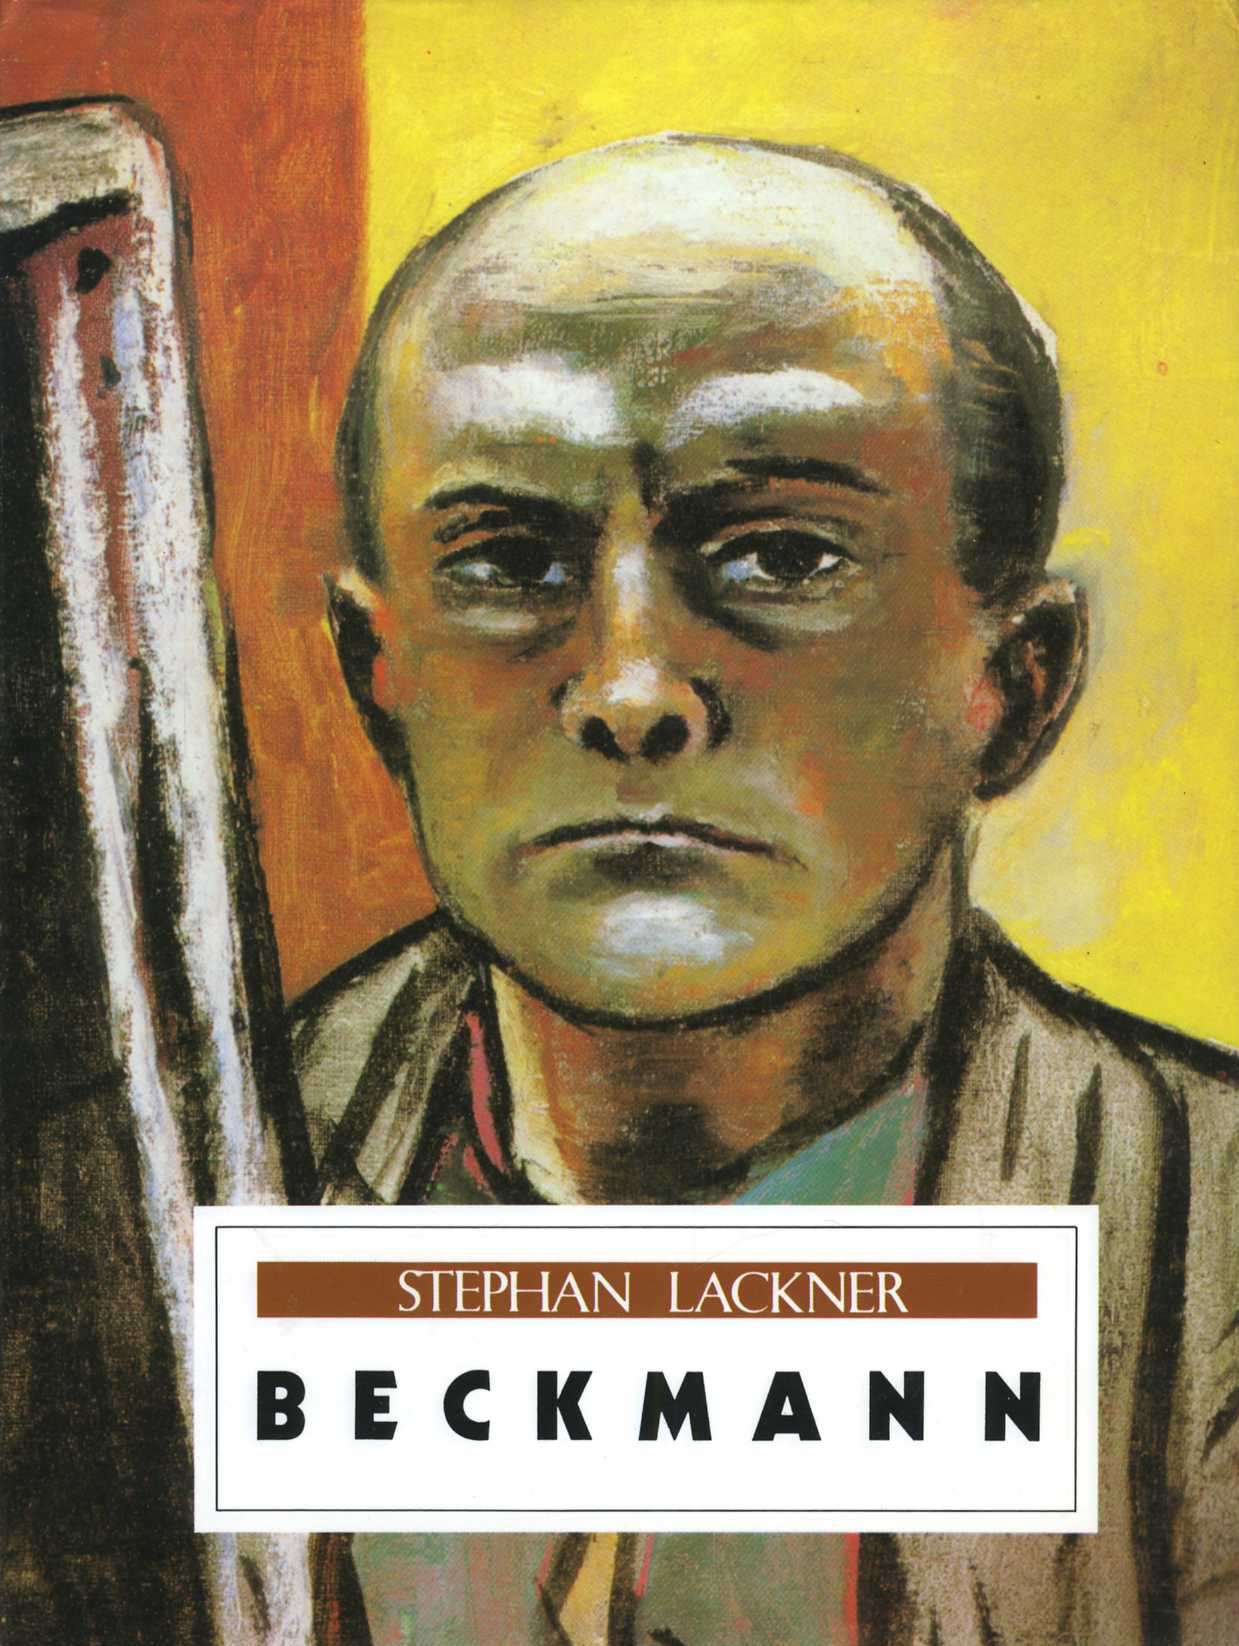 Max Beckmann (Stephan Lackner)